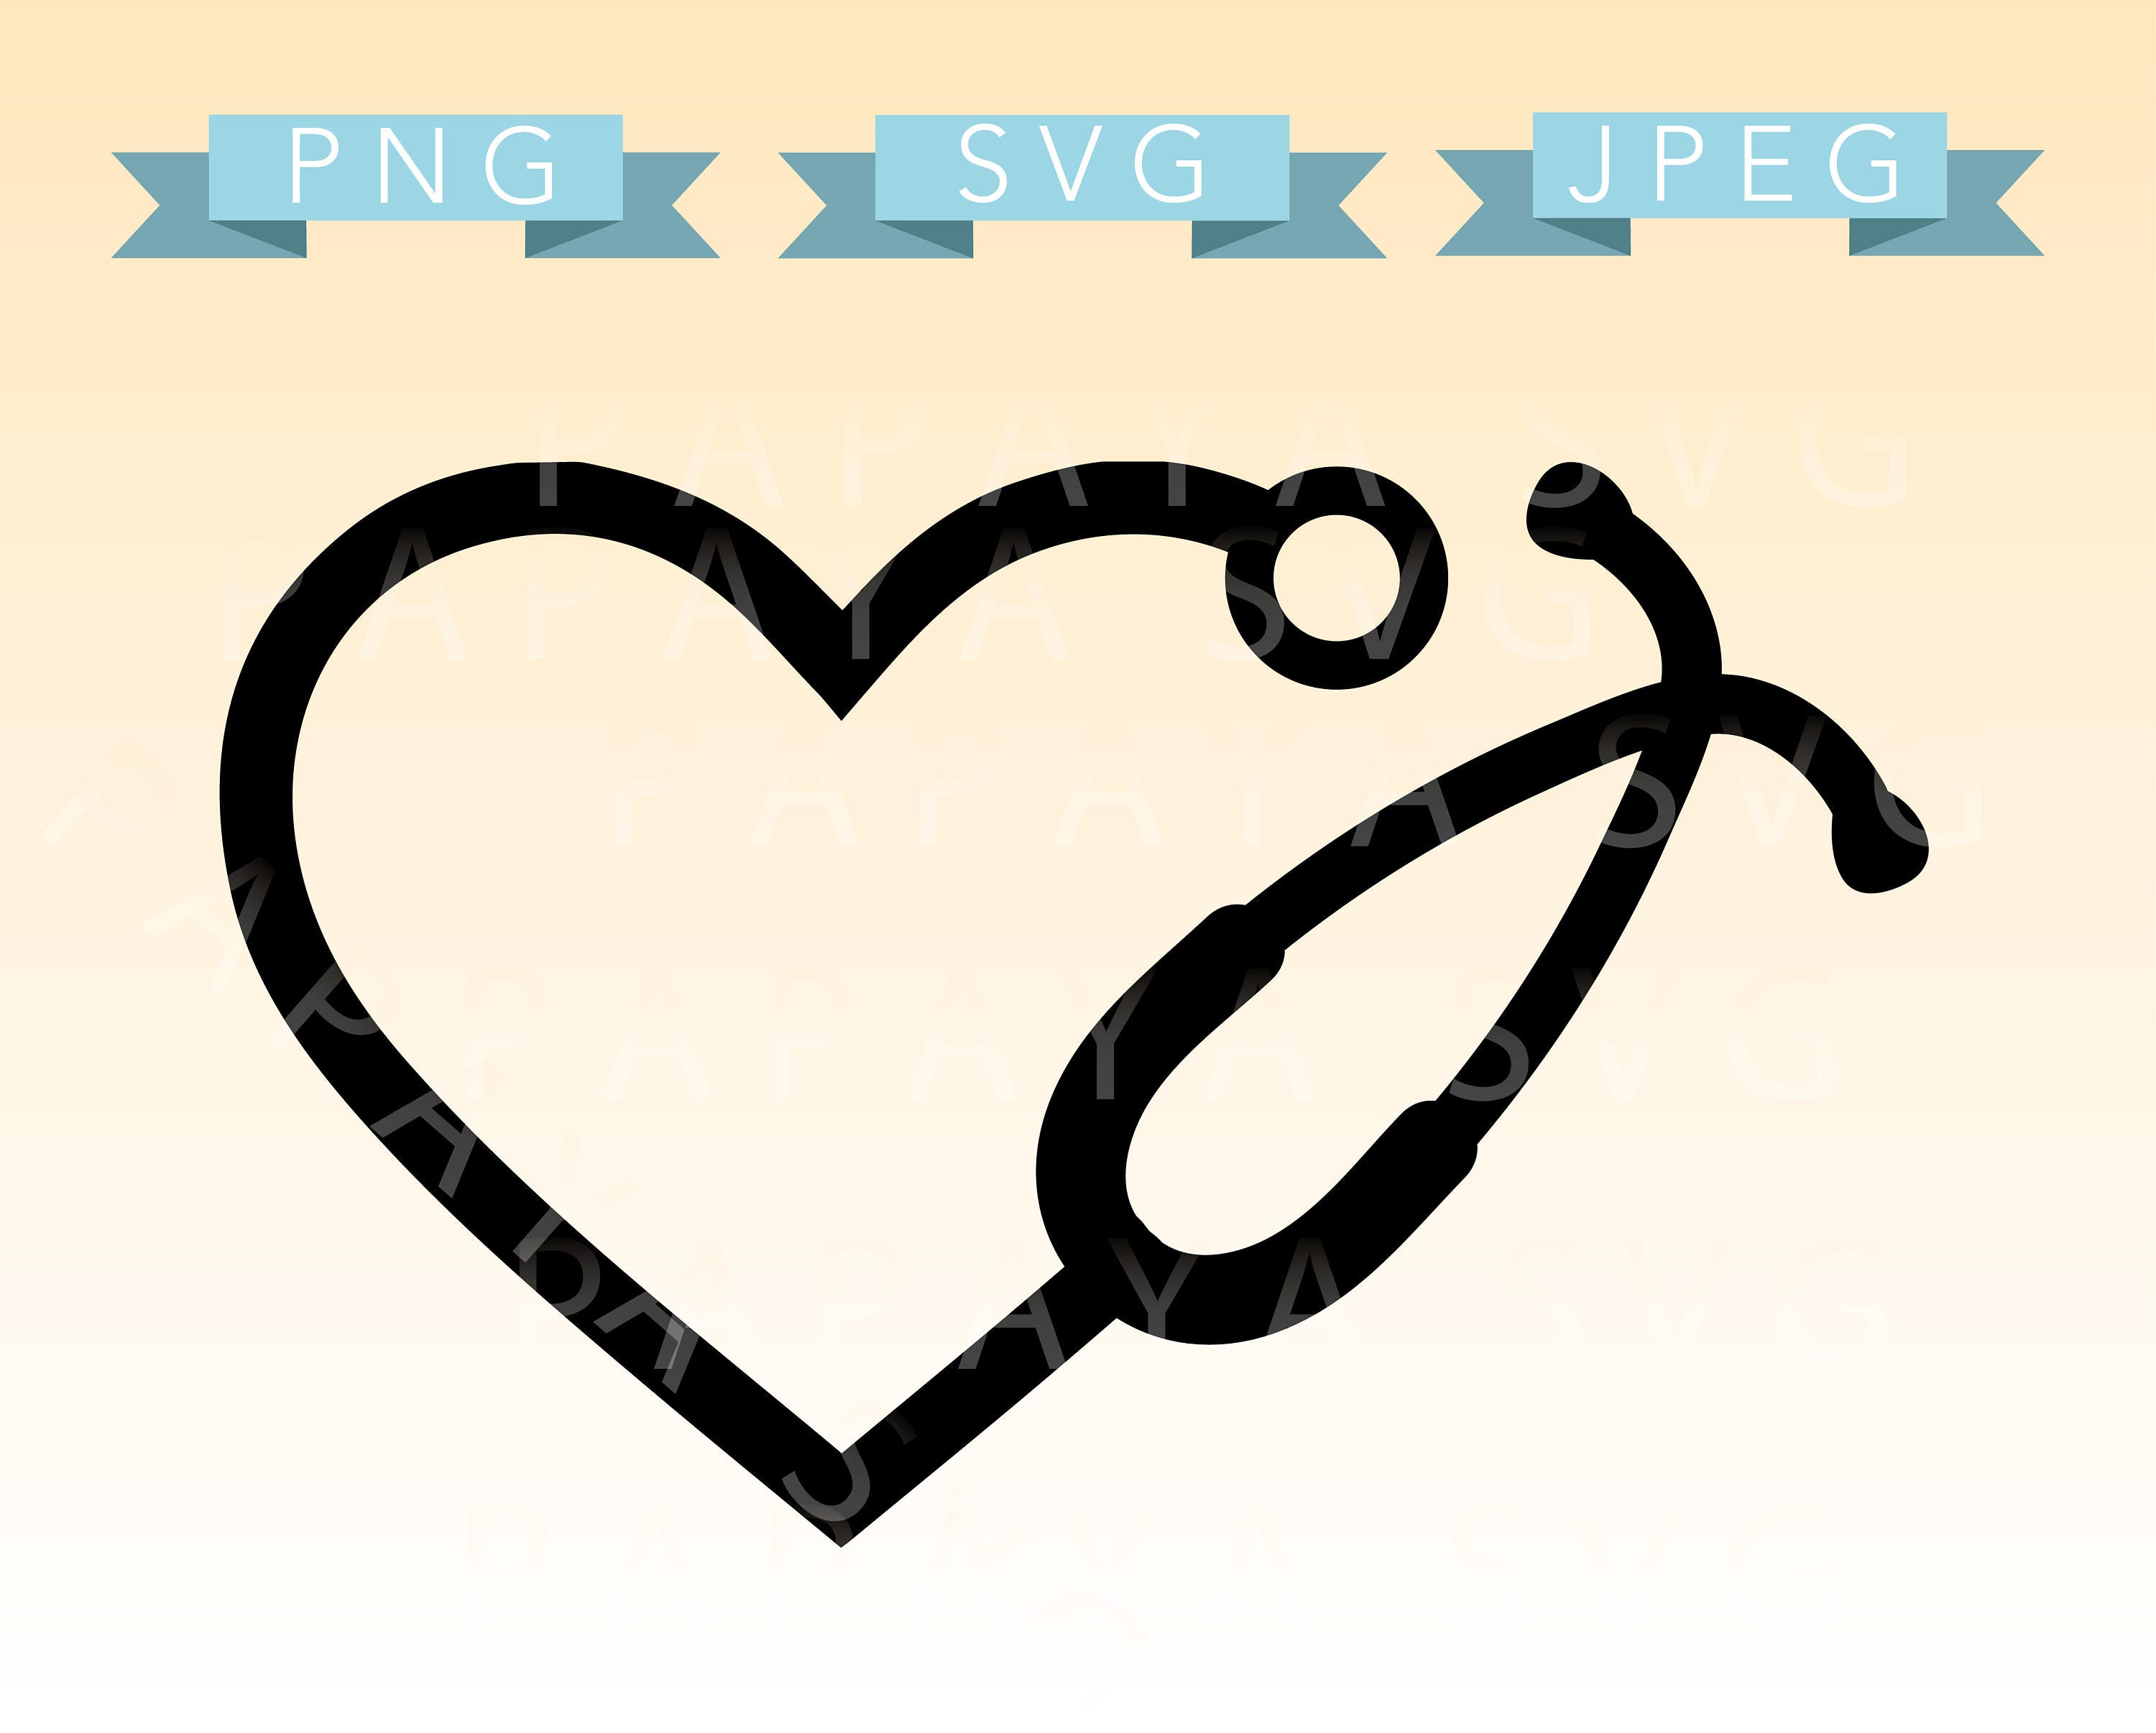 Stethoscope SVG Cut Files